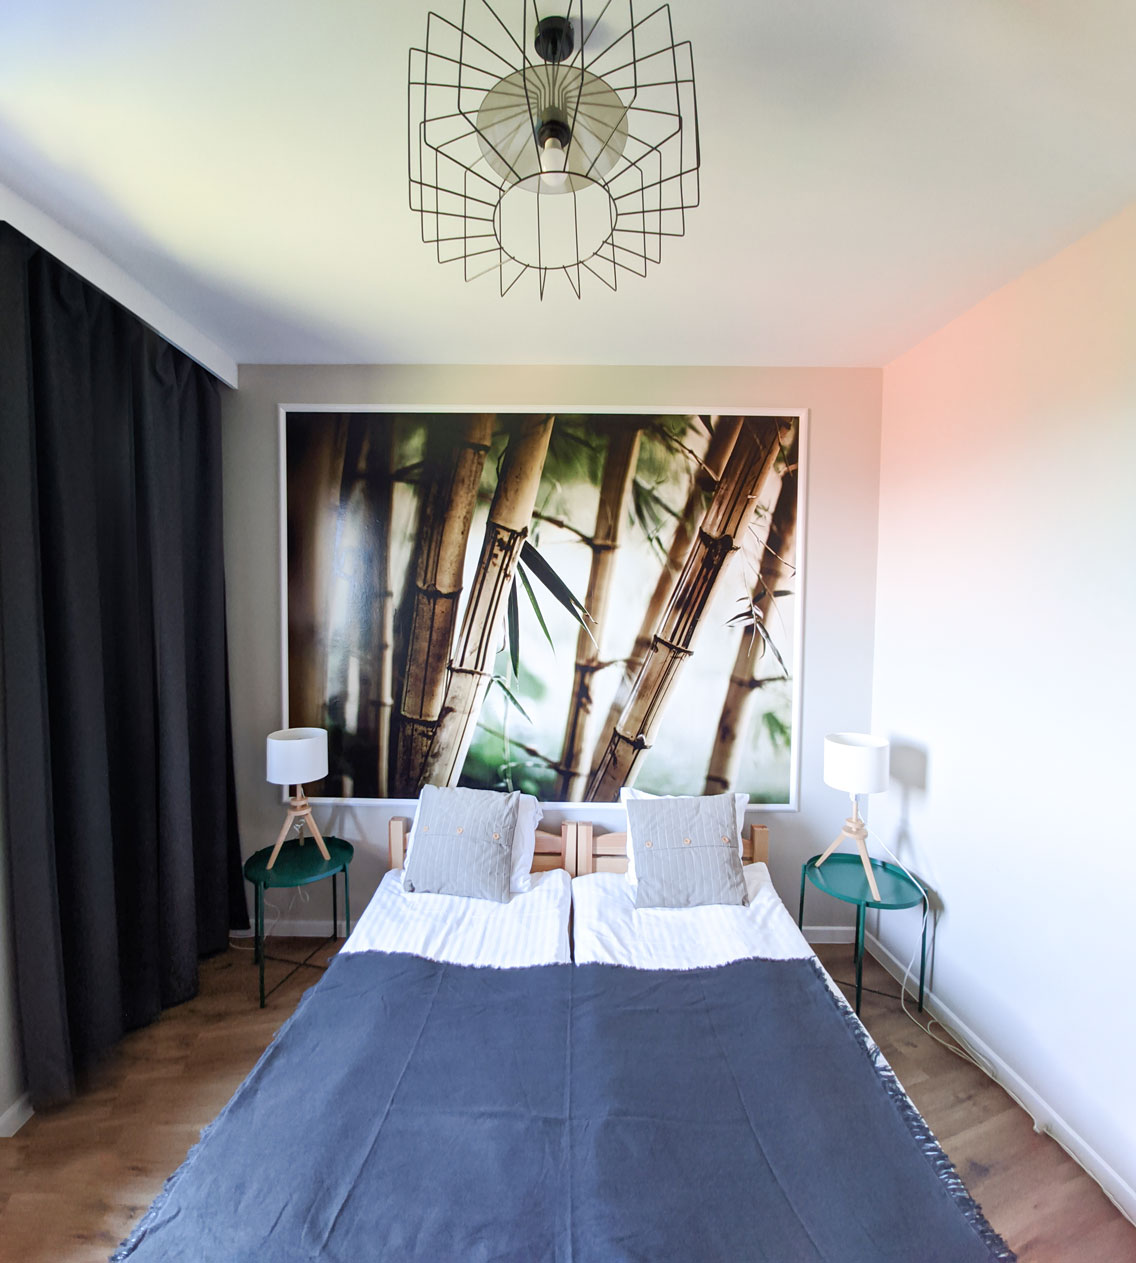 Pokój apartament bambusowy naturalny Villa Idylla Karkonosze pensjonat przesieka noclegi salon łózko łazienka kuchnia